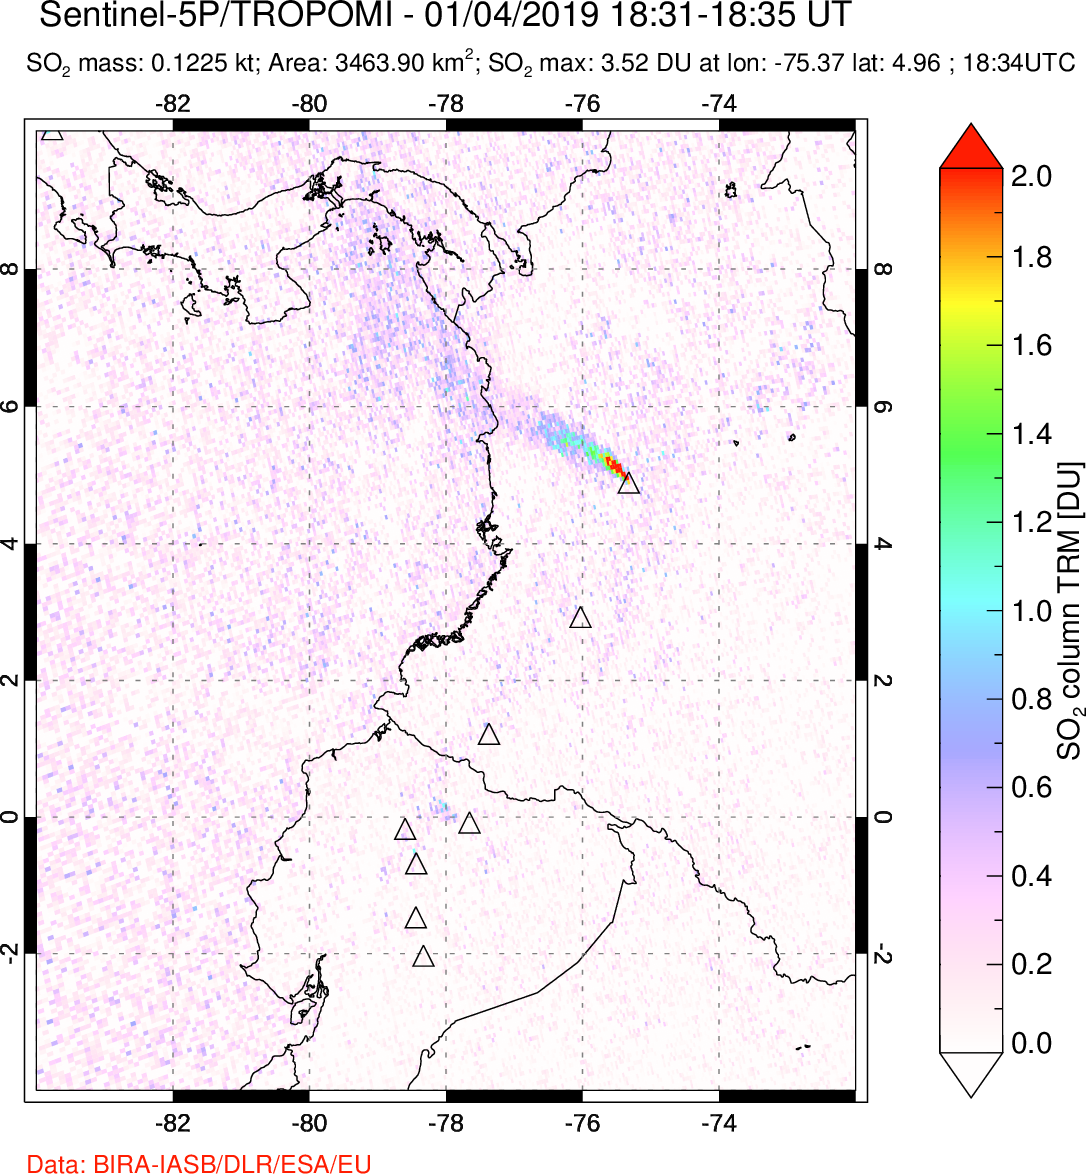 A sulfur dioxide image over Ecuador on Jan 04, 2019.